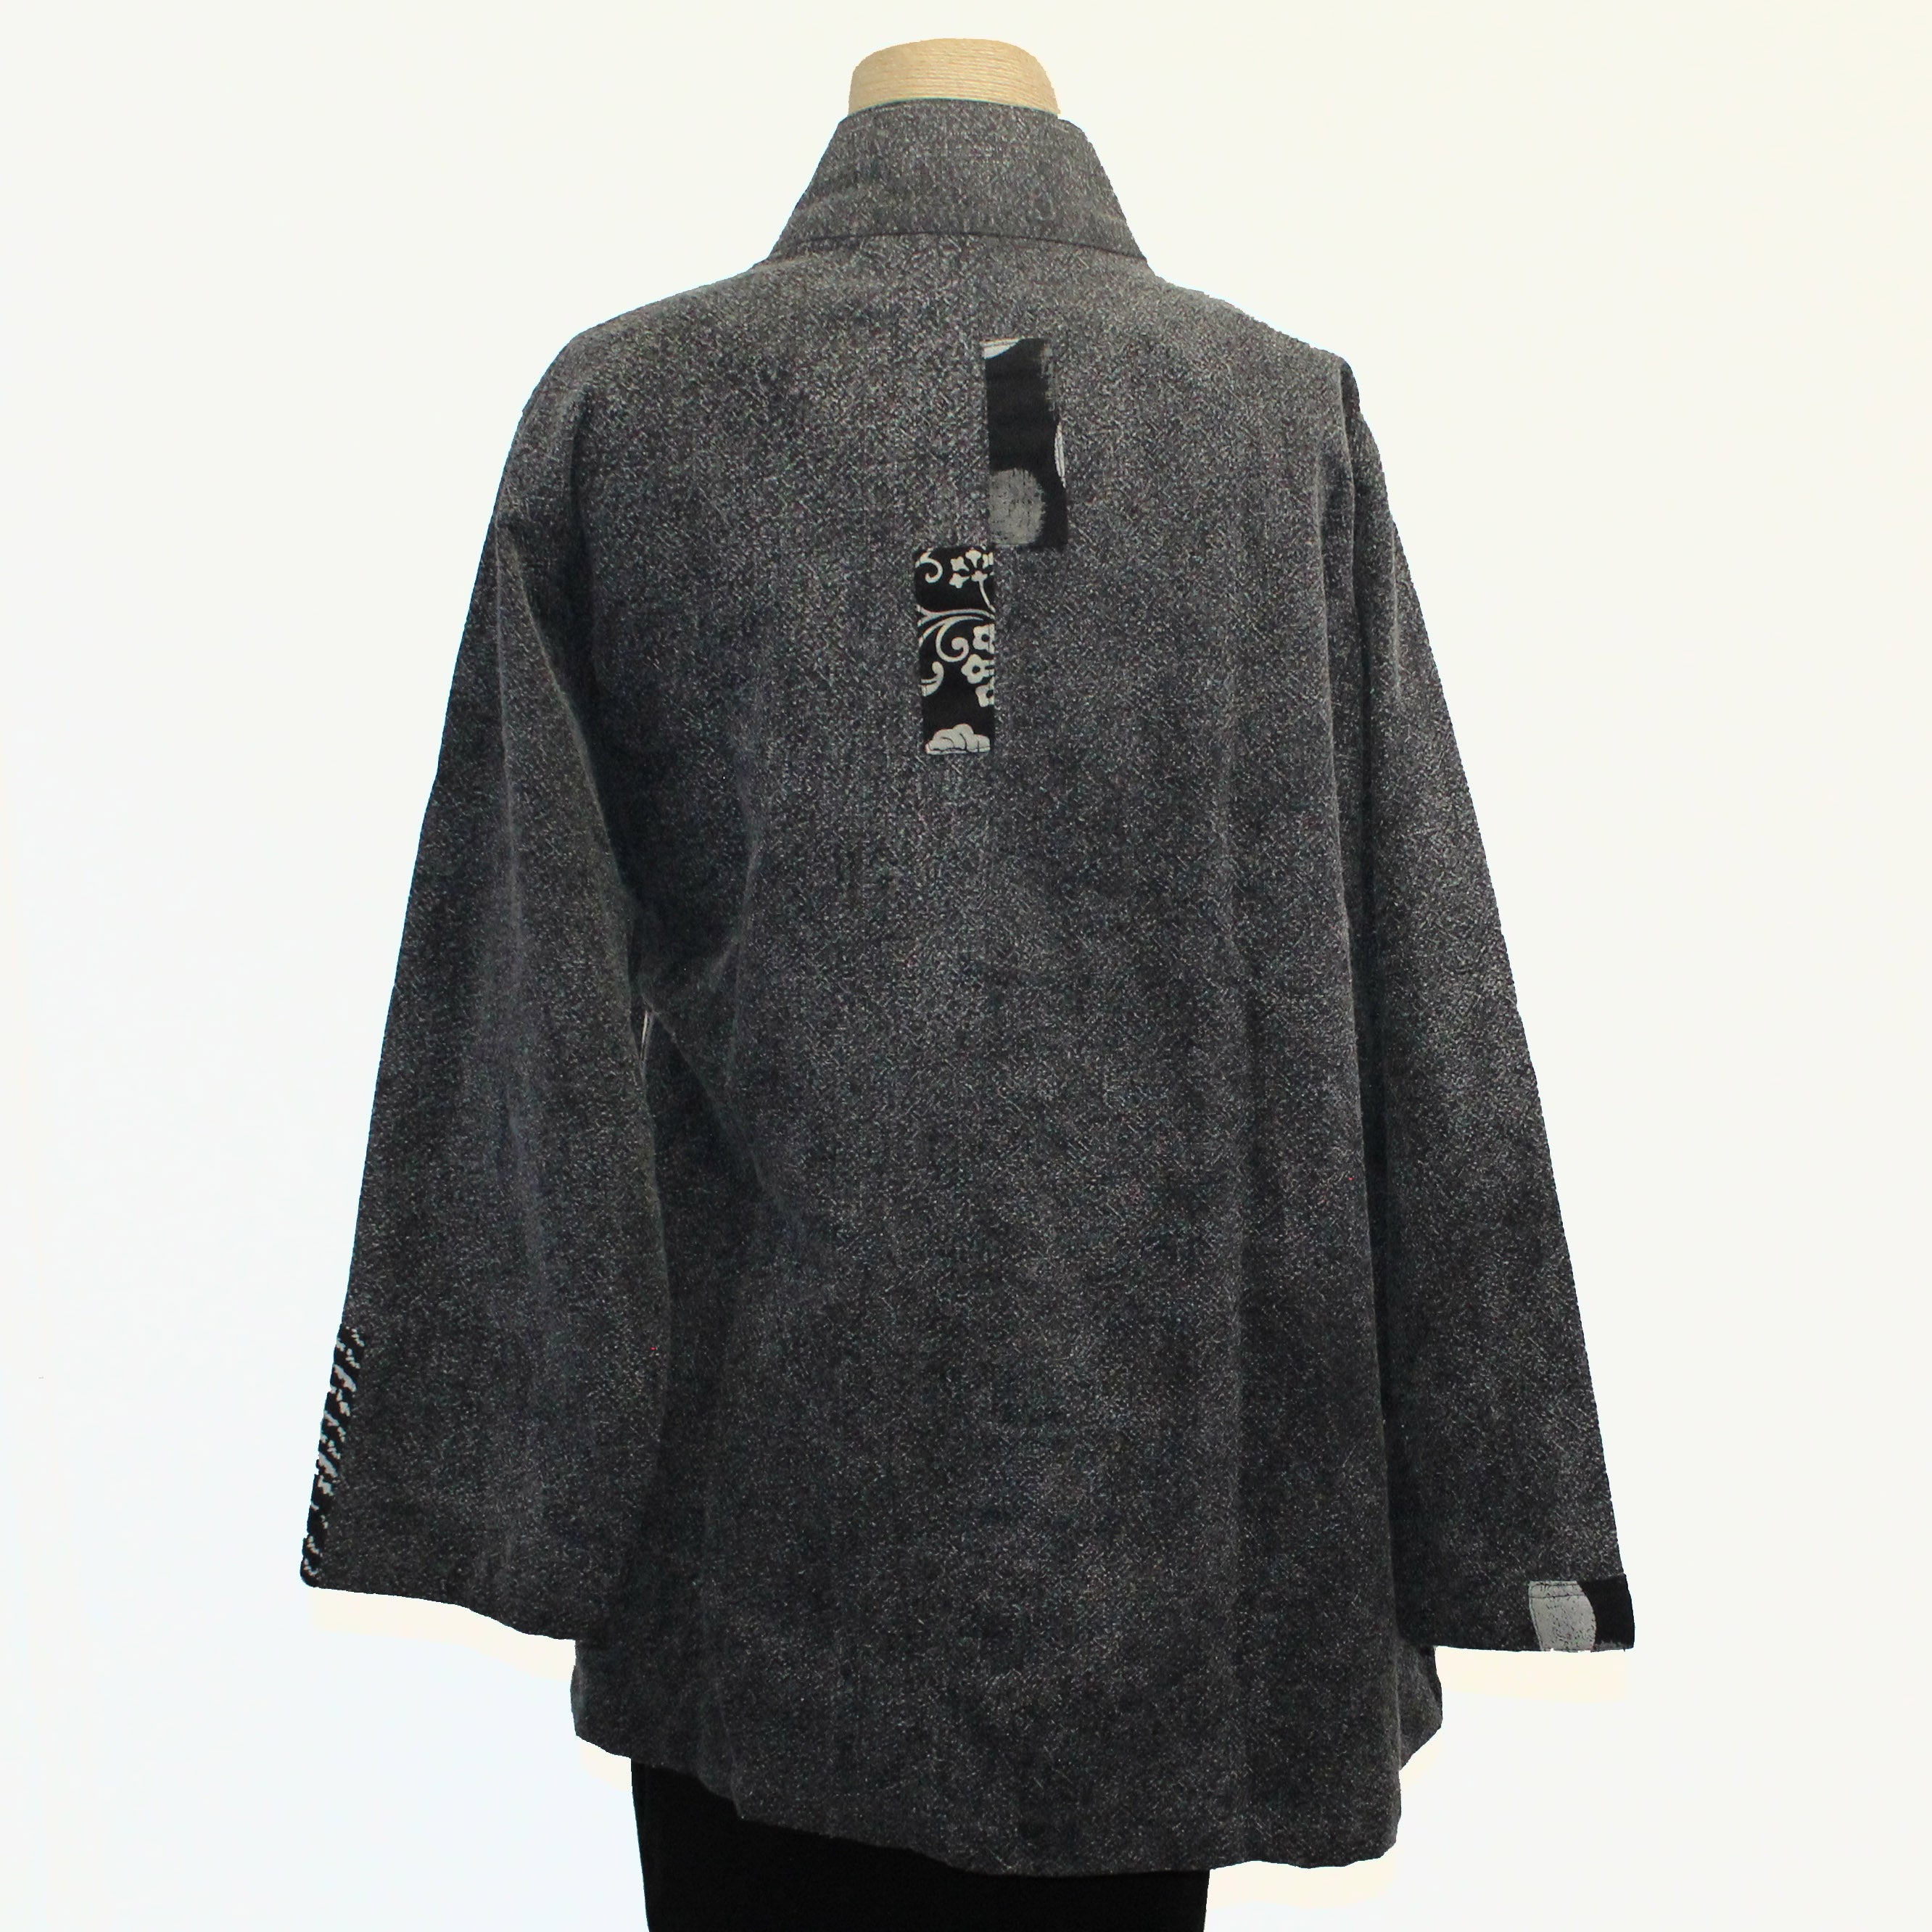 Yaza Jacket, Swing, Patch Front, Grey/Black & White S/M